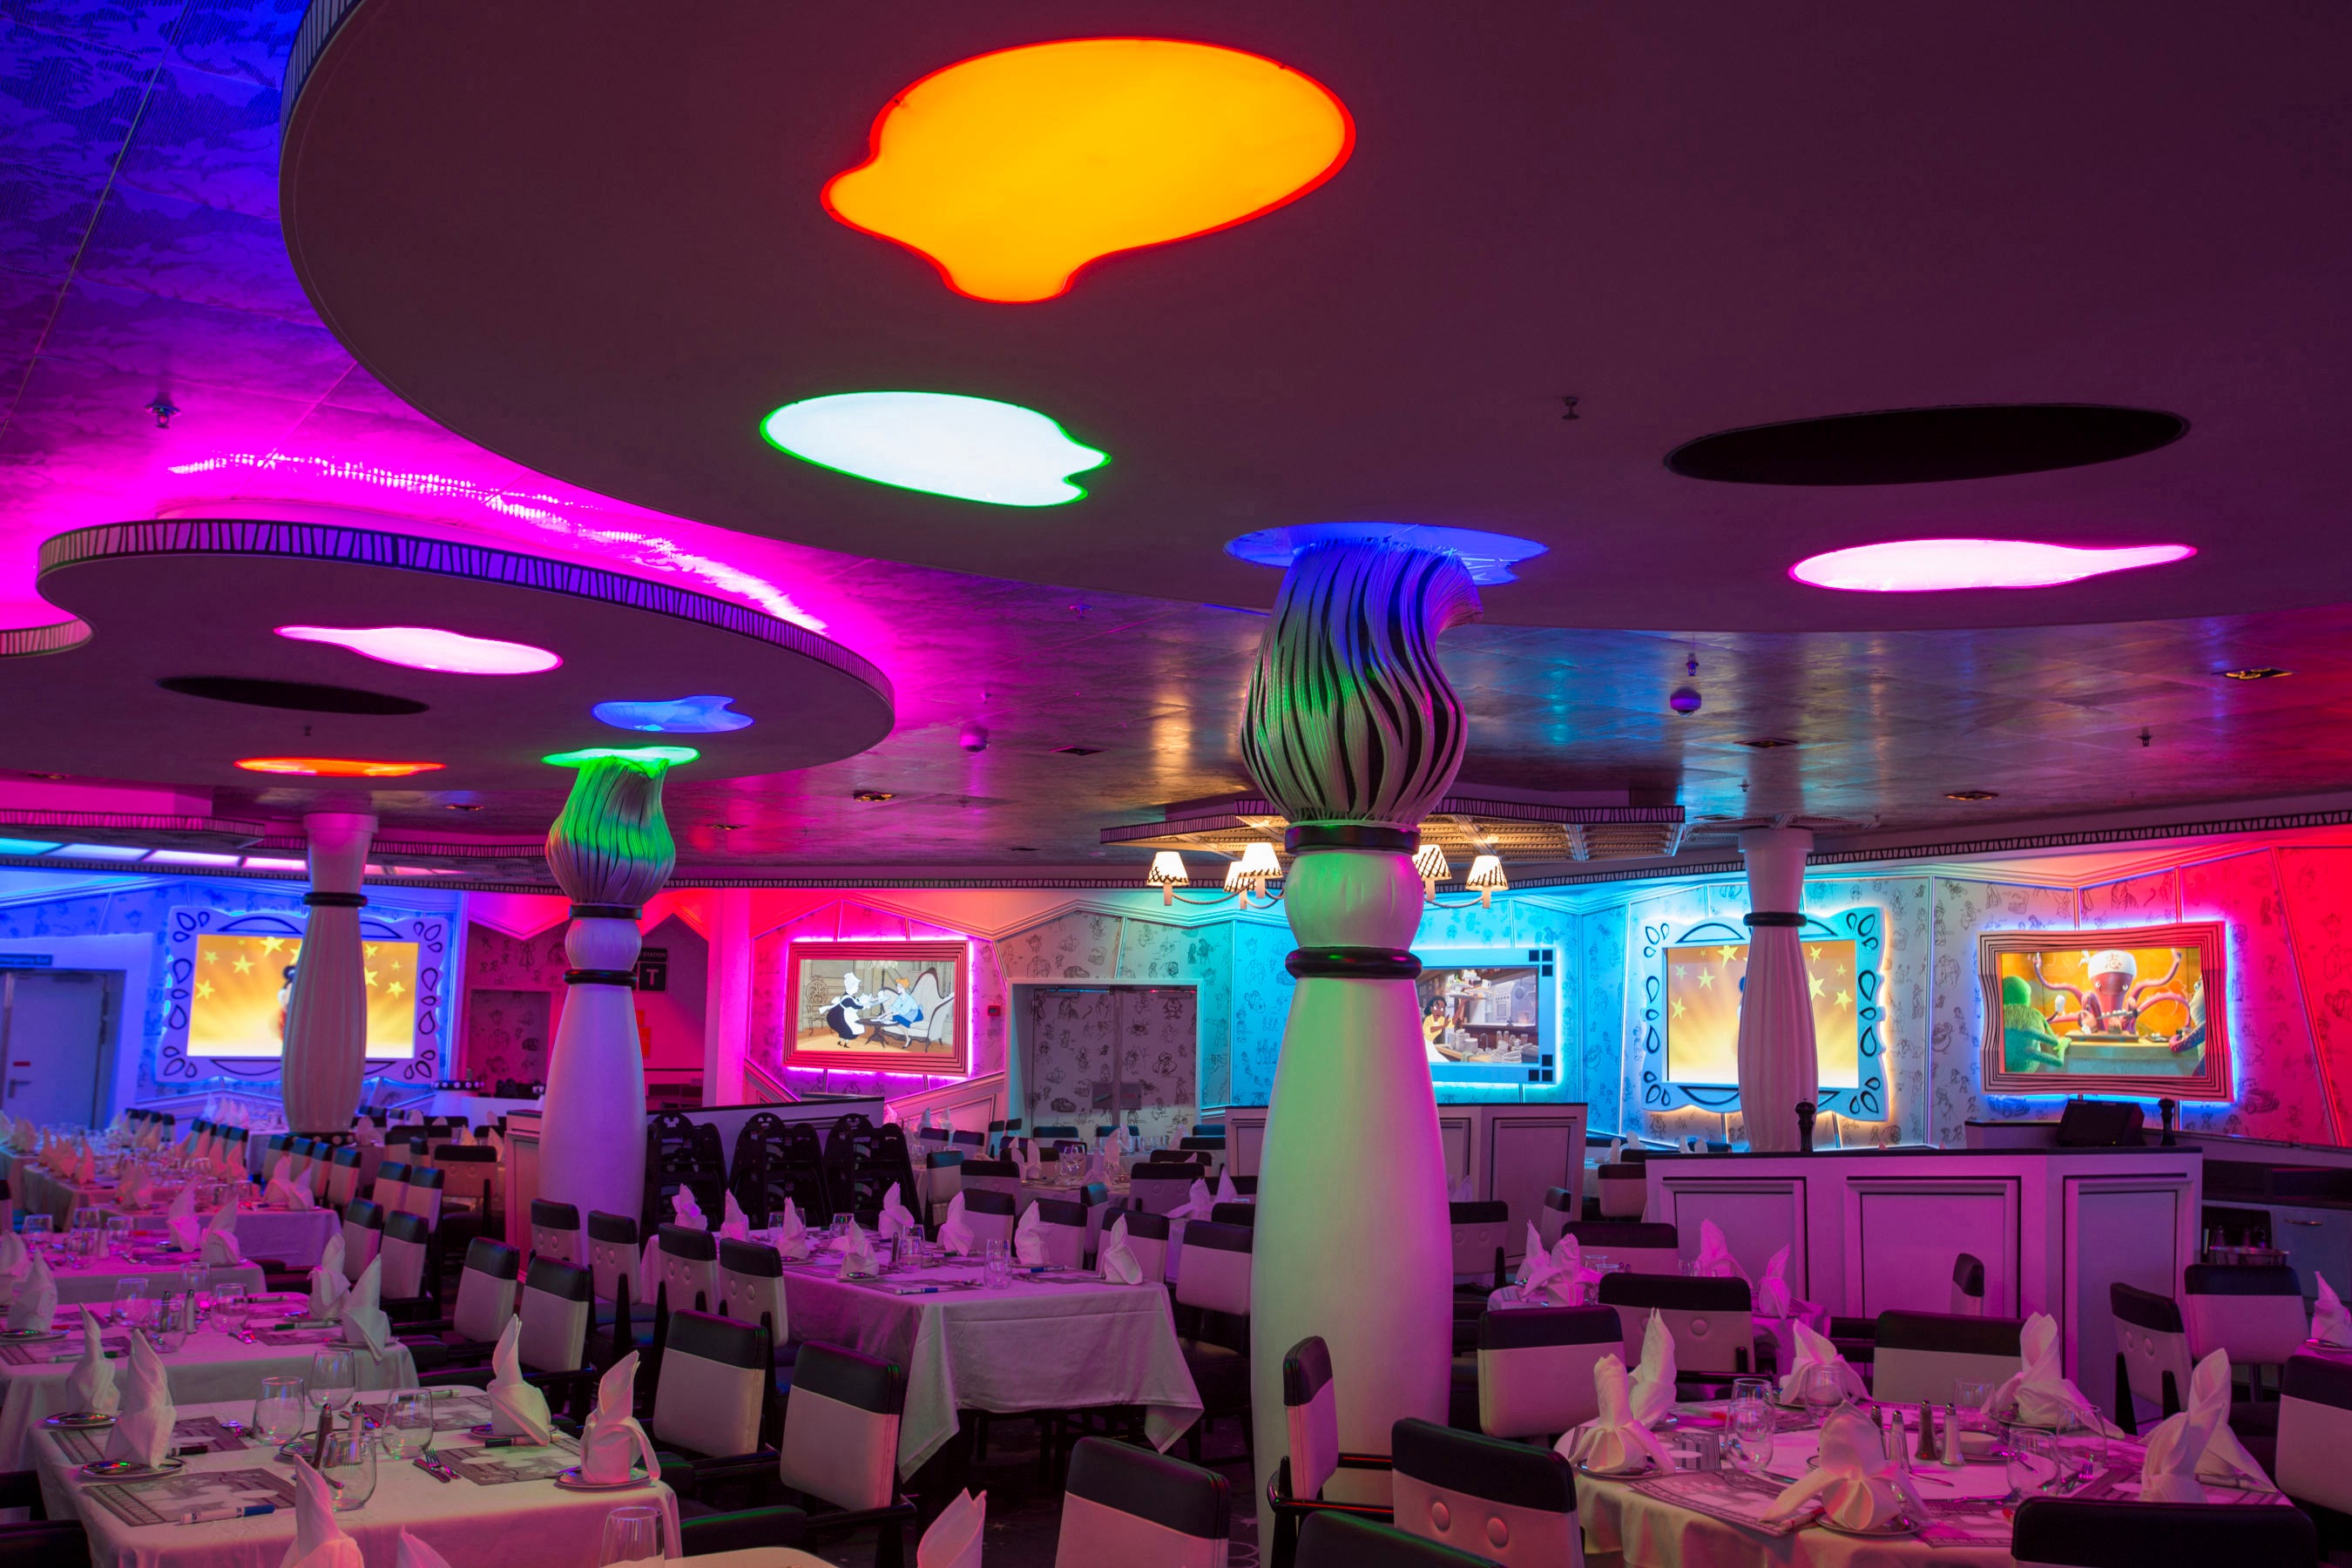 Animator’s Palette restaurant on the Disney Magic (PA/Disney Cruise Line/Jimmy DeFlippo)